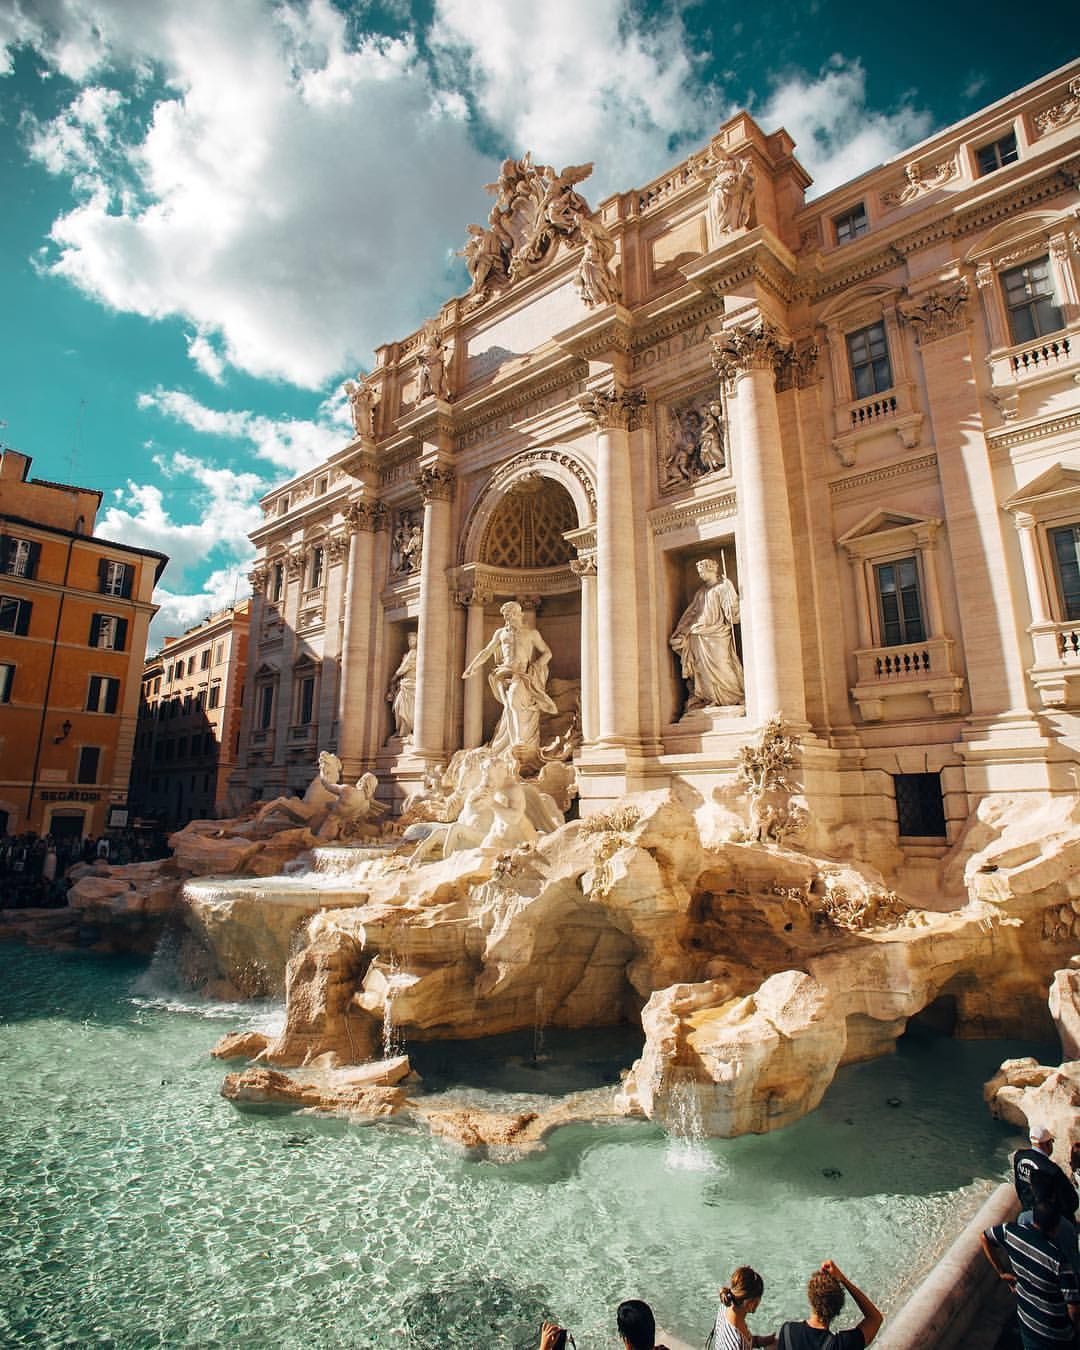 Everyone's favourite fountain - “Fontana di Trevi” Rome, Italy